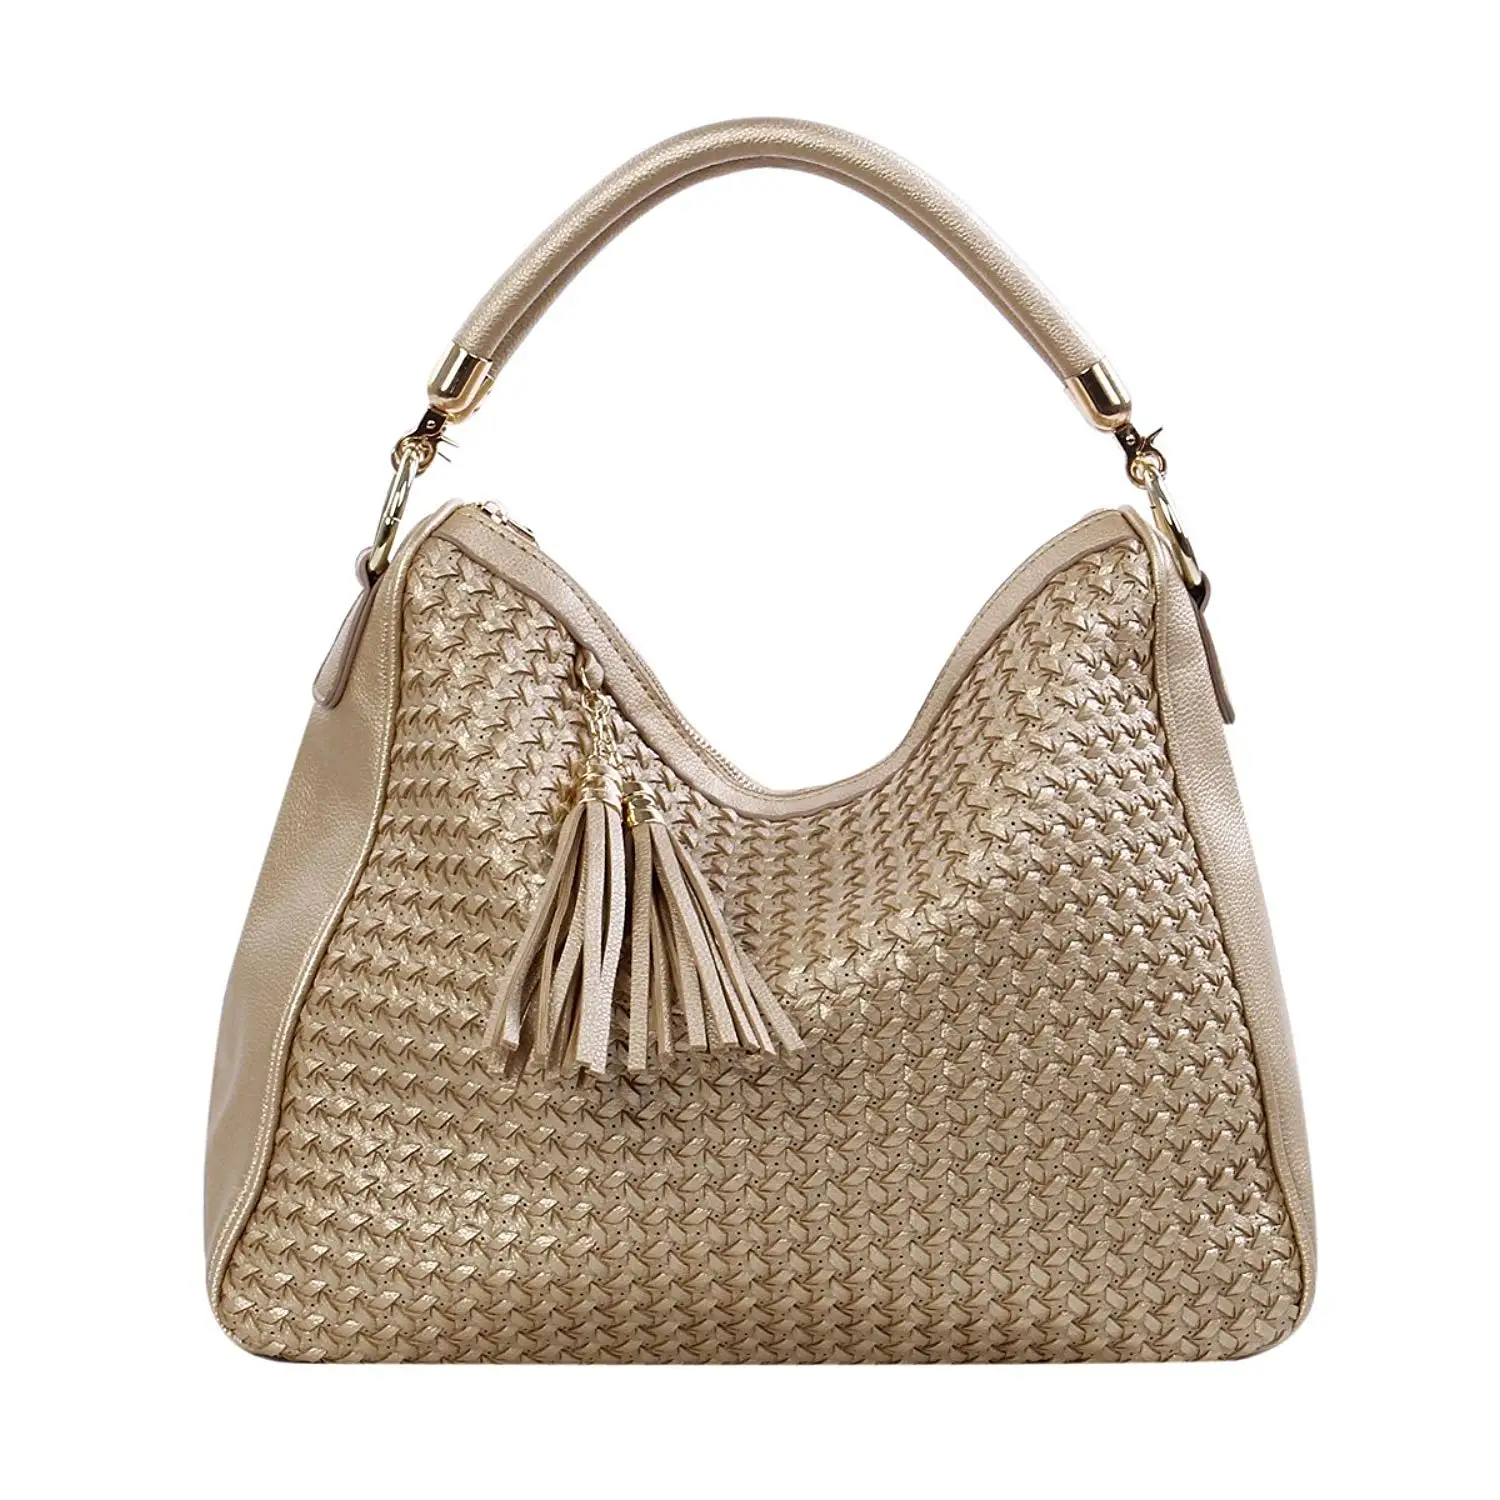 Cheap Braided Handbag, find Braided Handbag deals on line at Alibaba.com